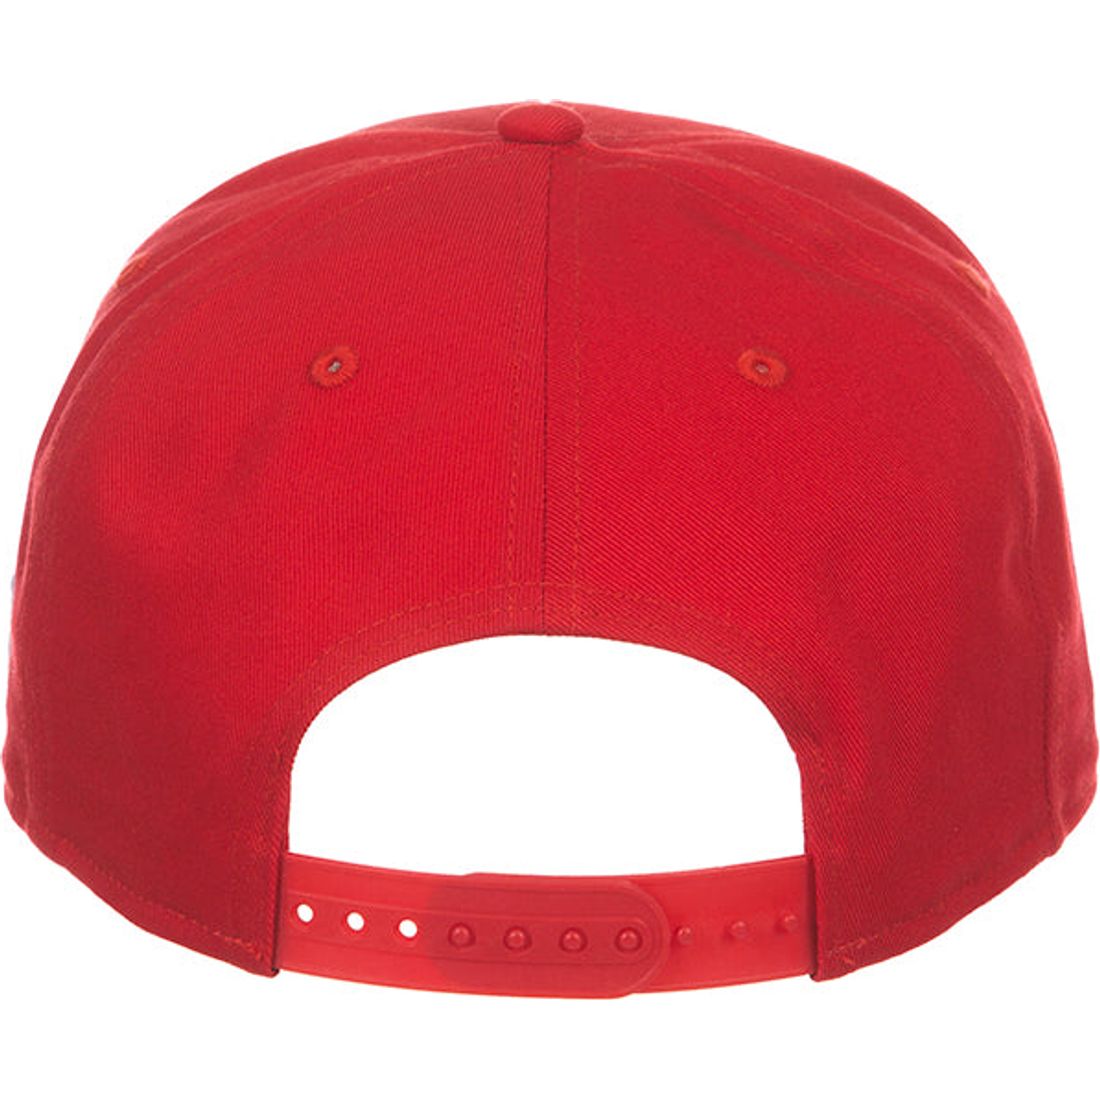 BBC Red BB Helmet Snapback Hat (831-6800)